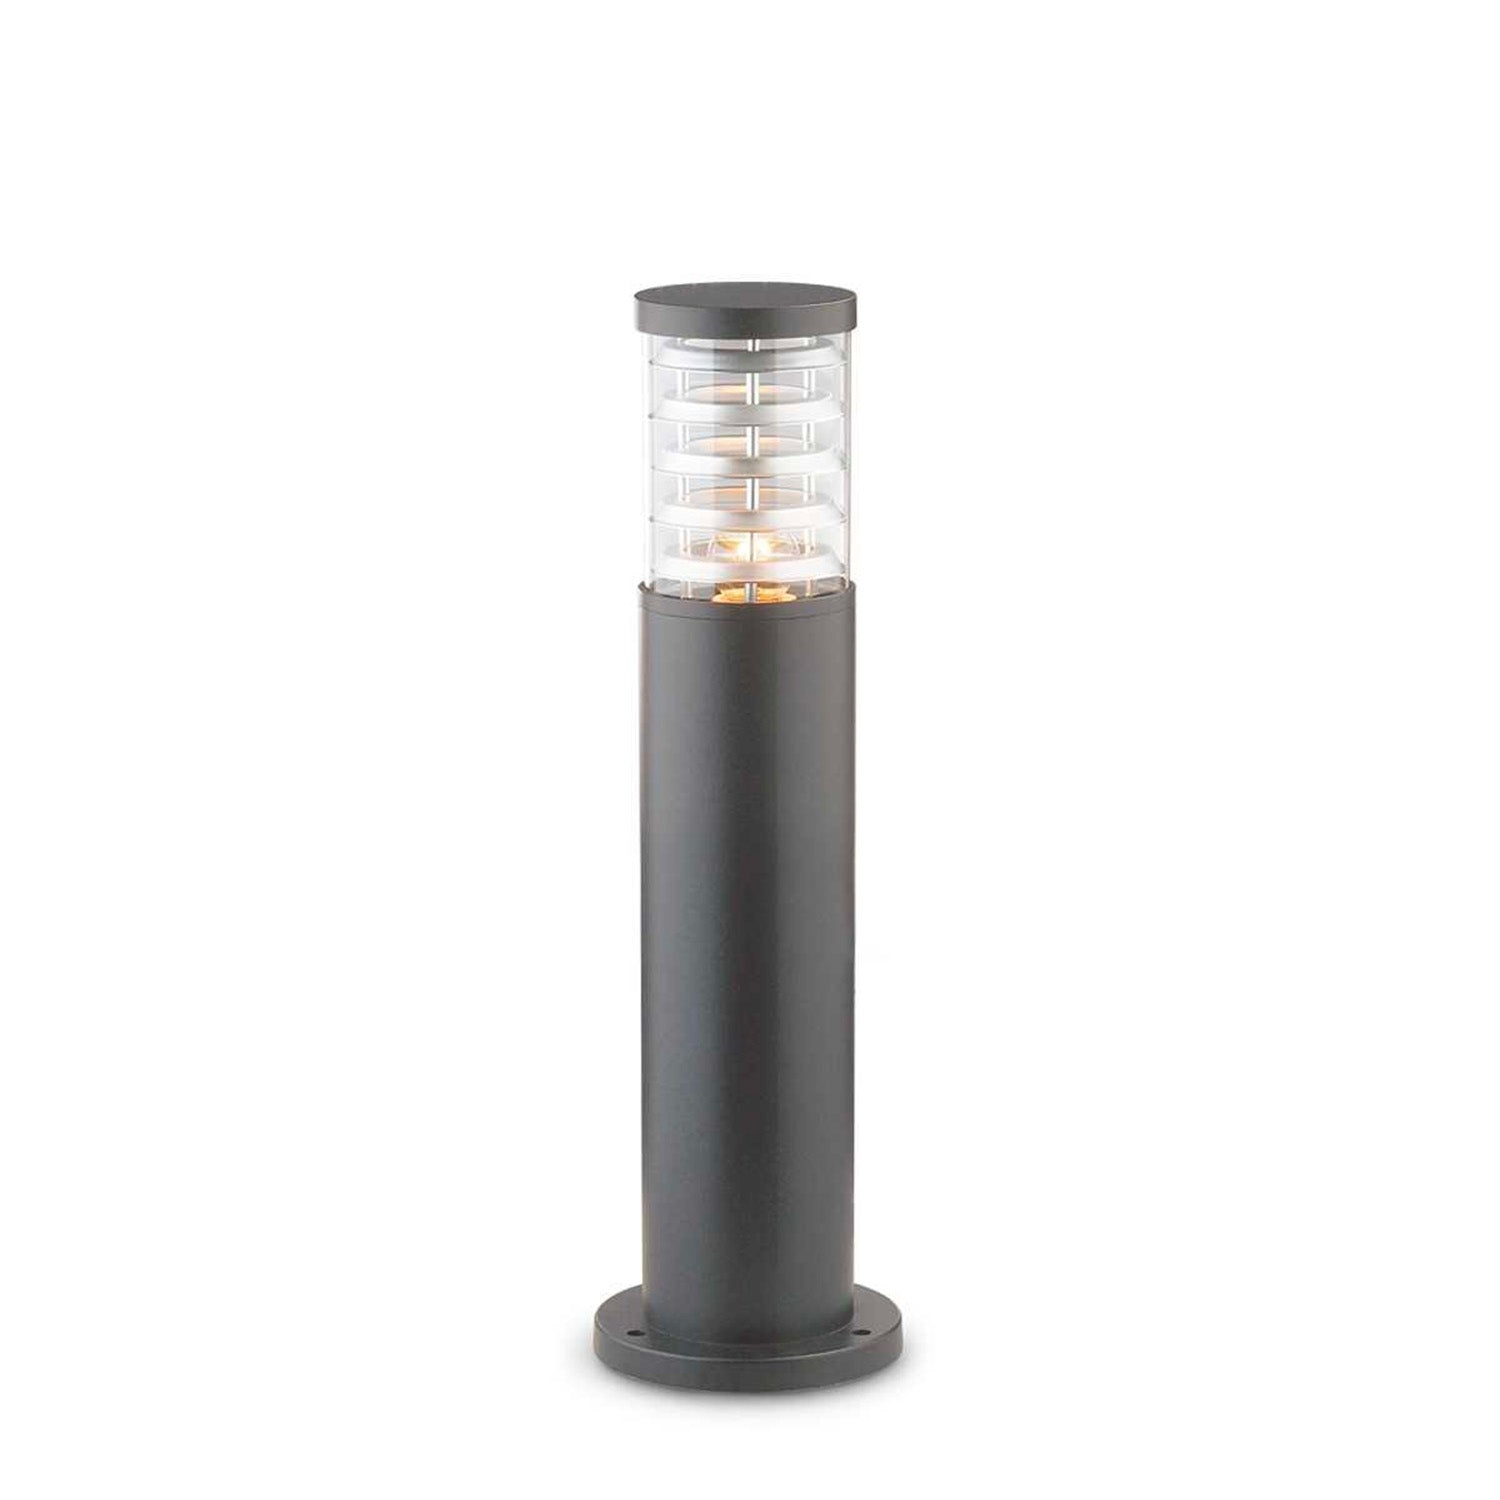 TRONCO - Industrial style outdoor bollard light